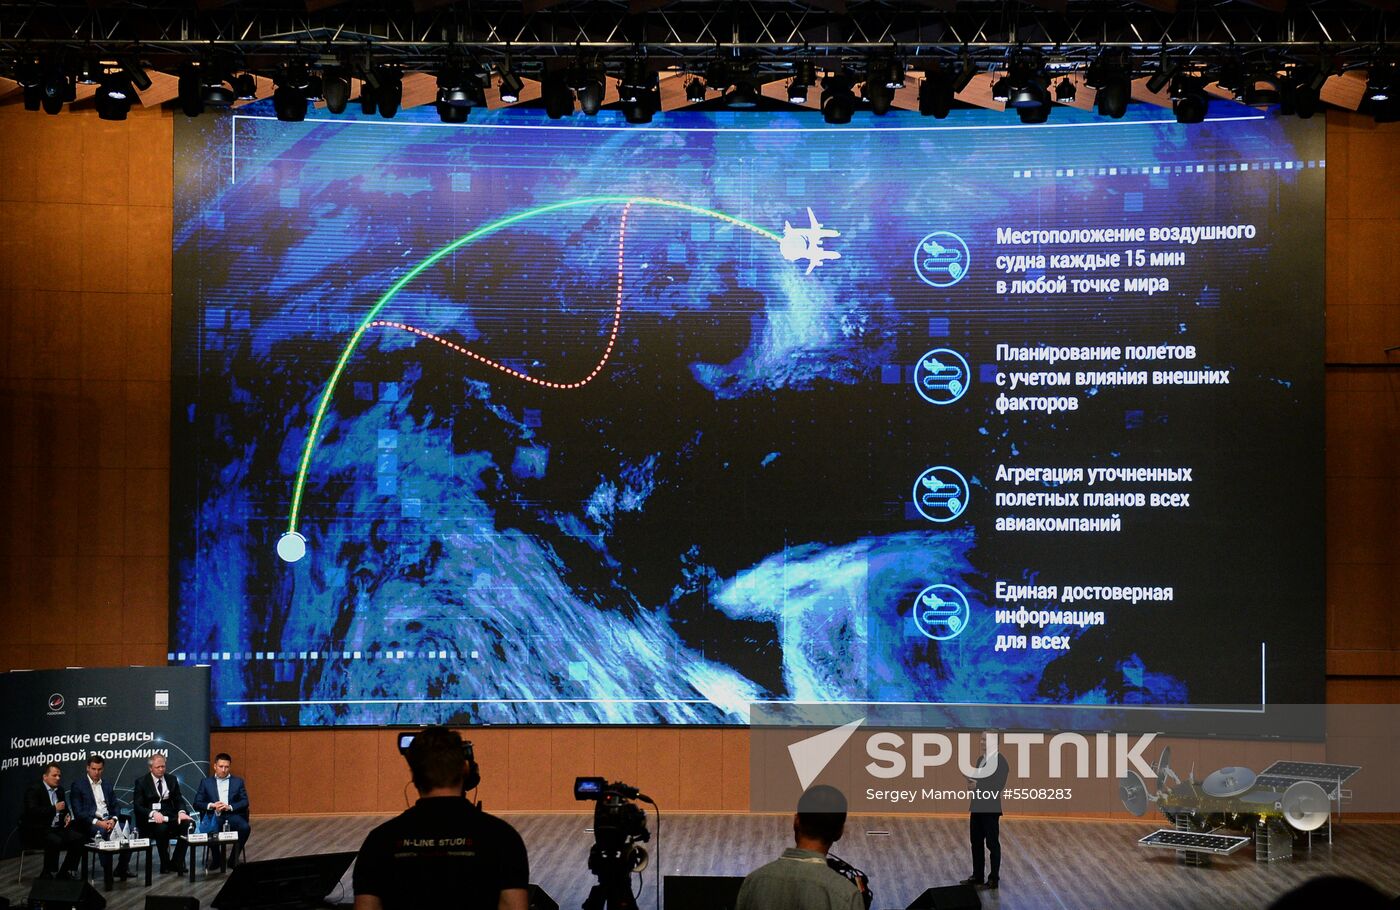 Presentation of Roscosmos space services